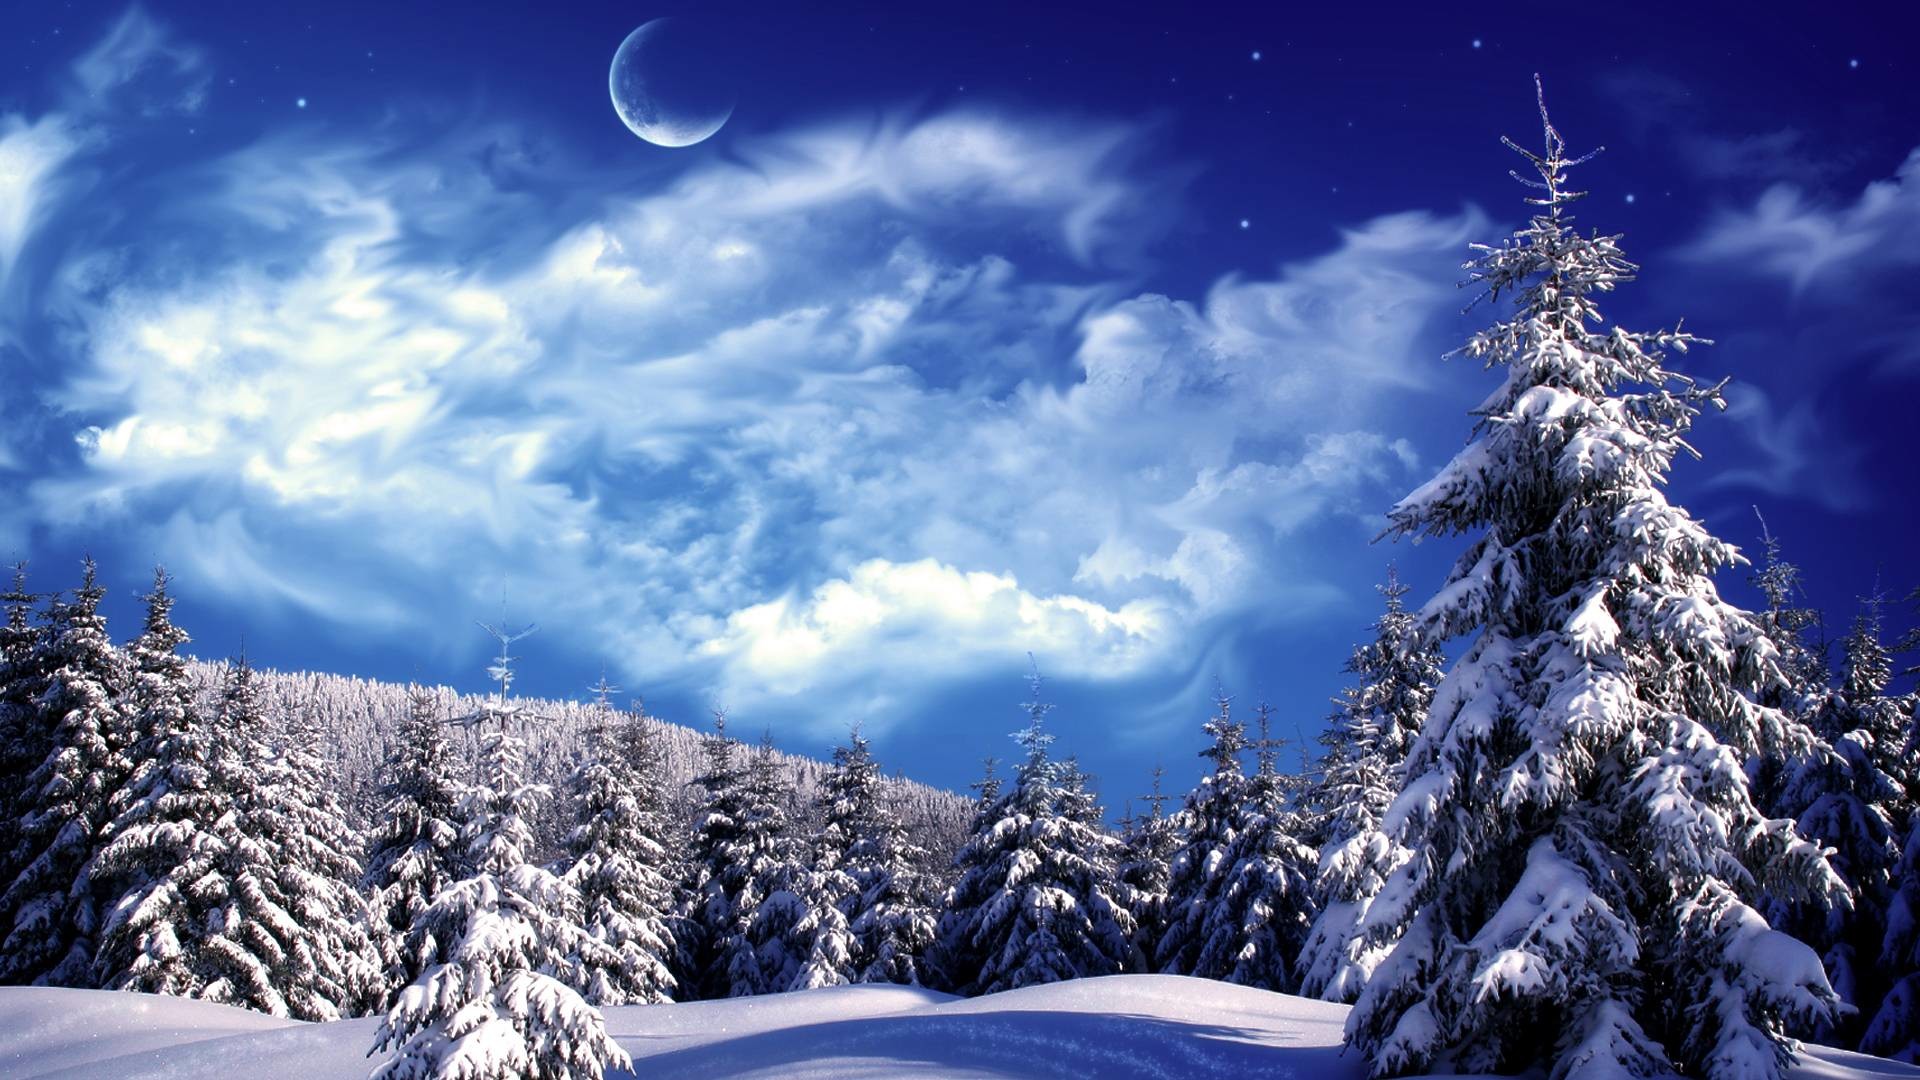 Winter Wonderland Wallpaper Wide or HD | Fantasy Wallpapers